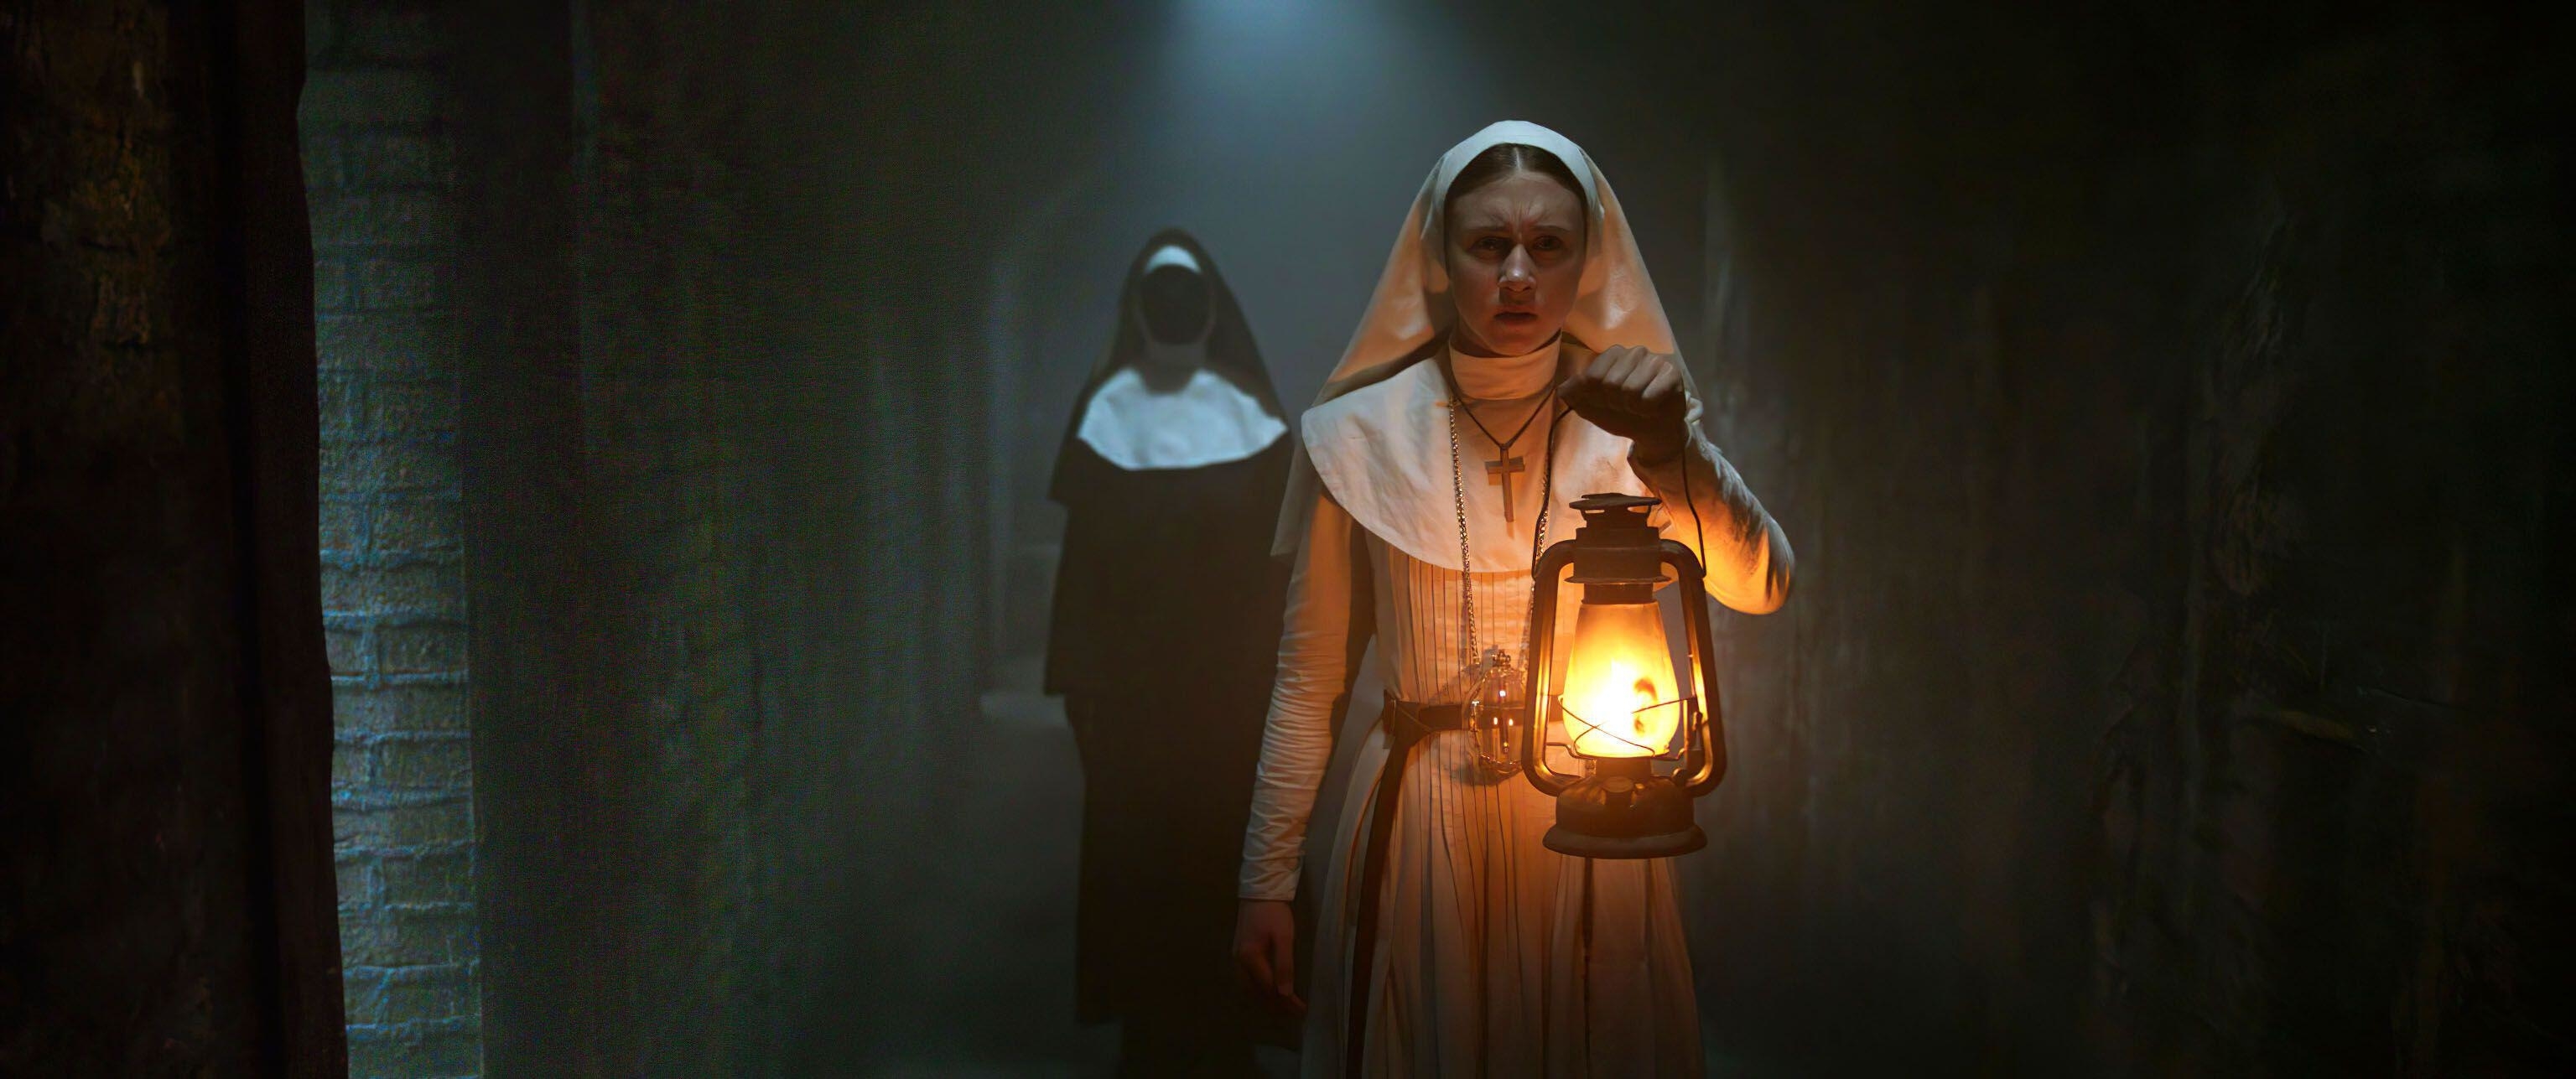 Taissa Farmiga walks with a lantern down a dark tunnel with a creepy nun following behind her